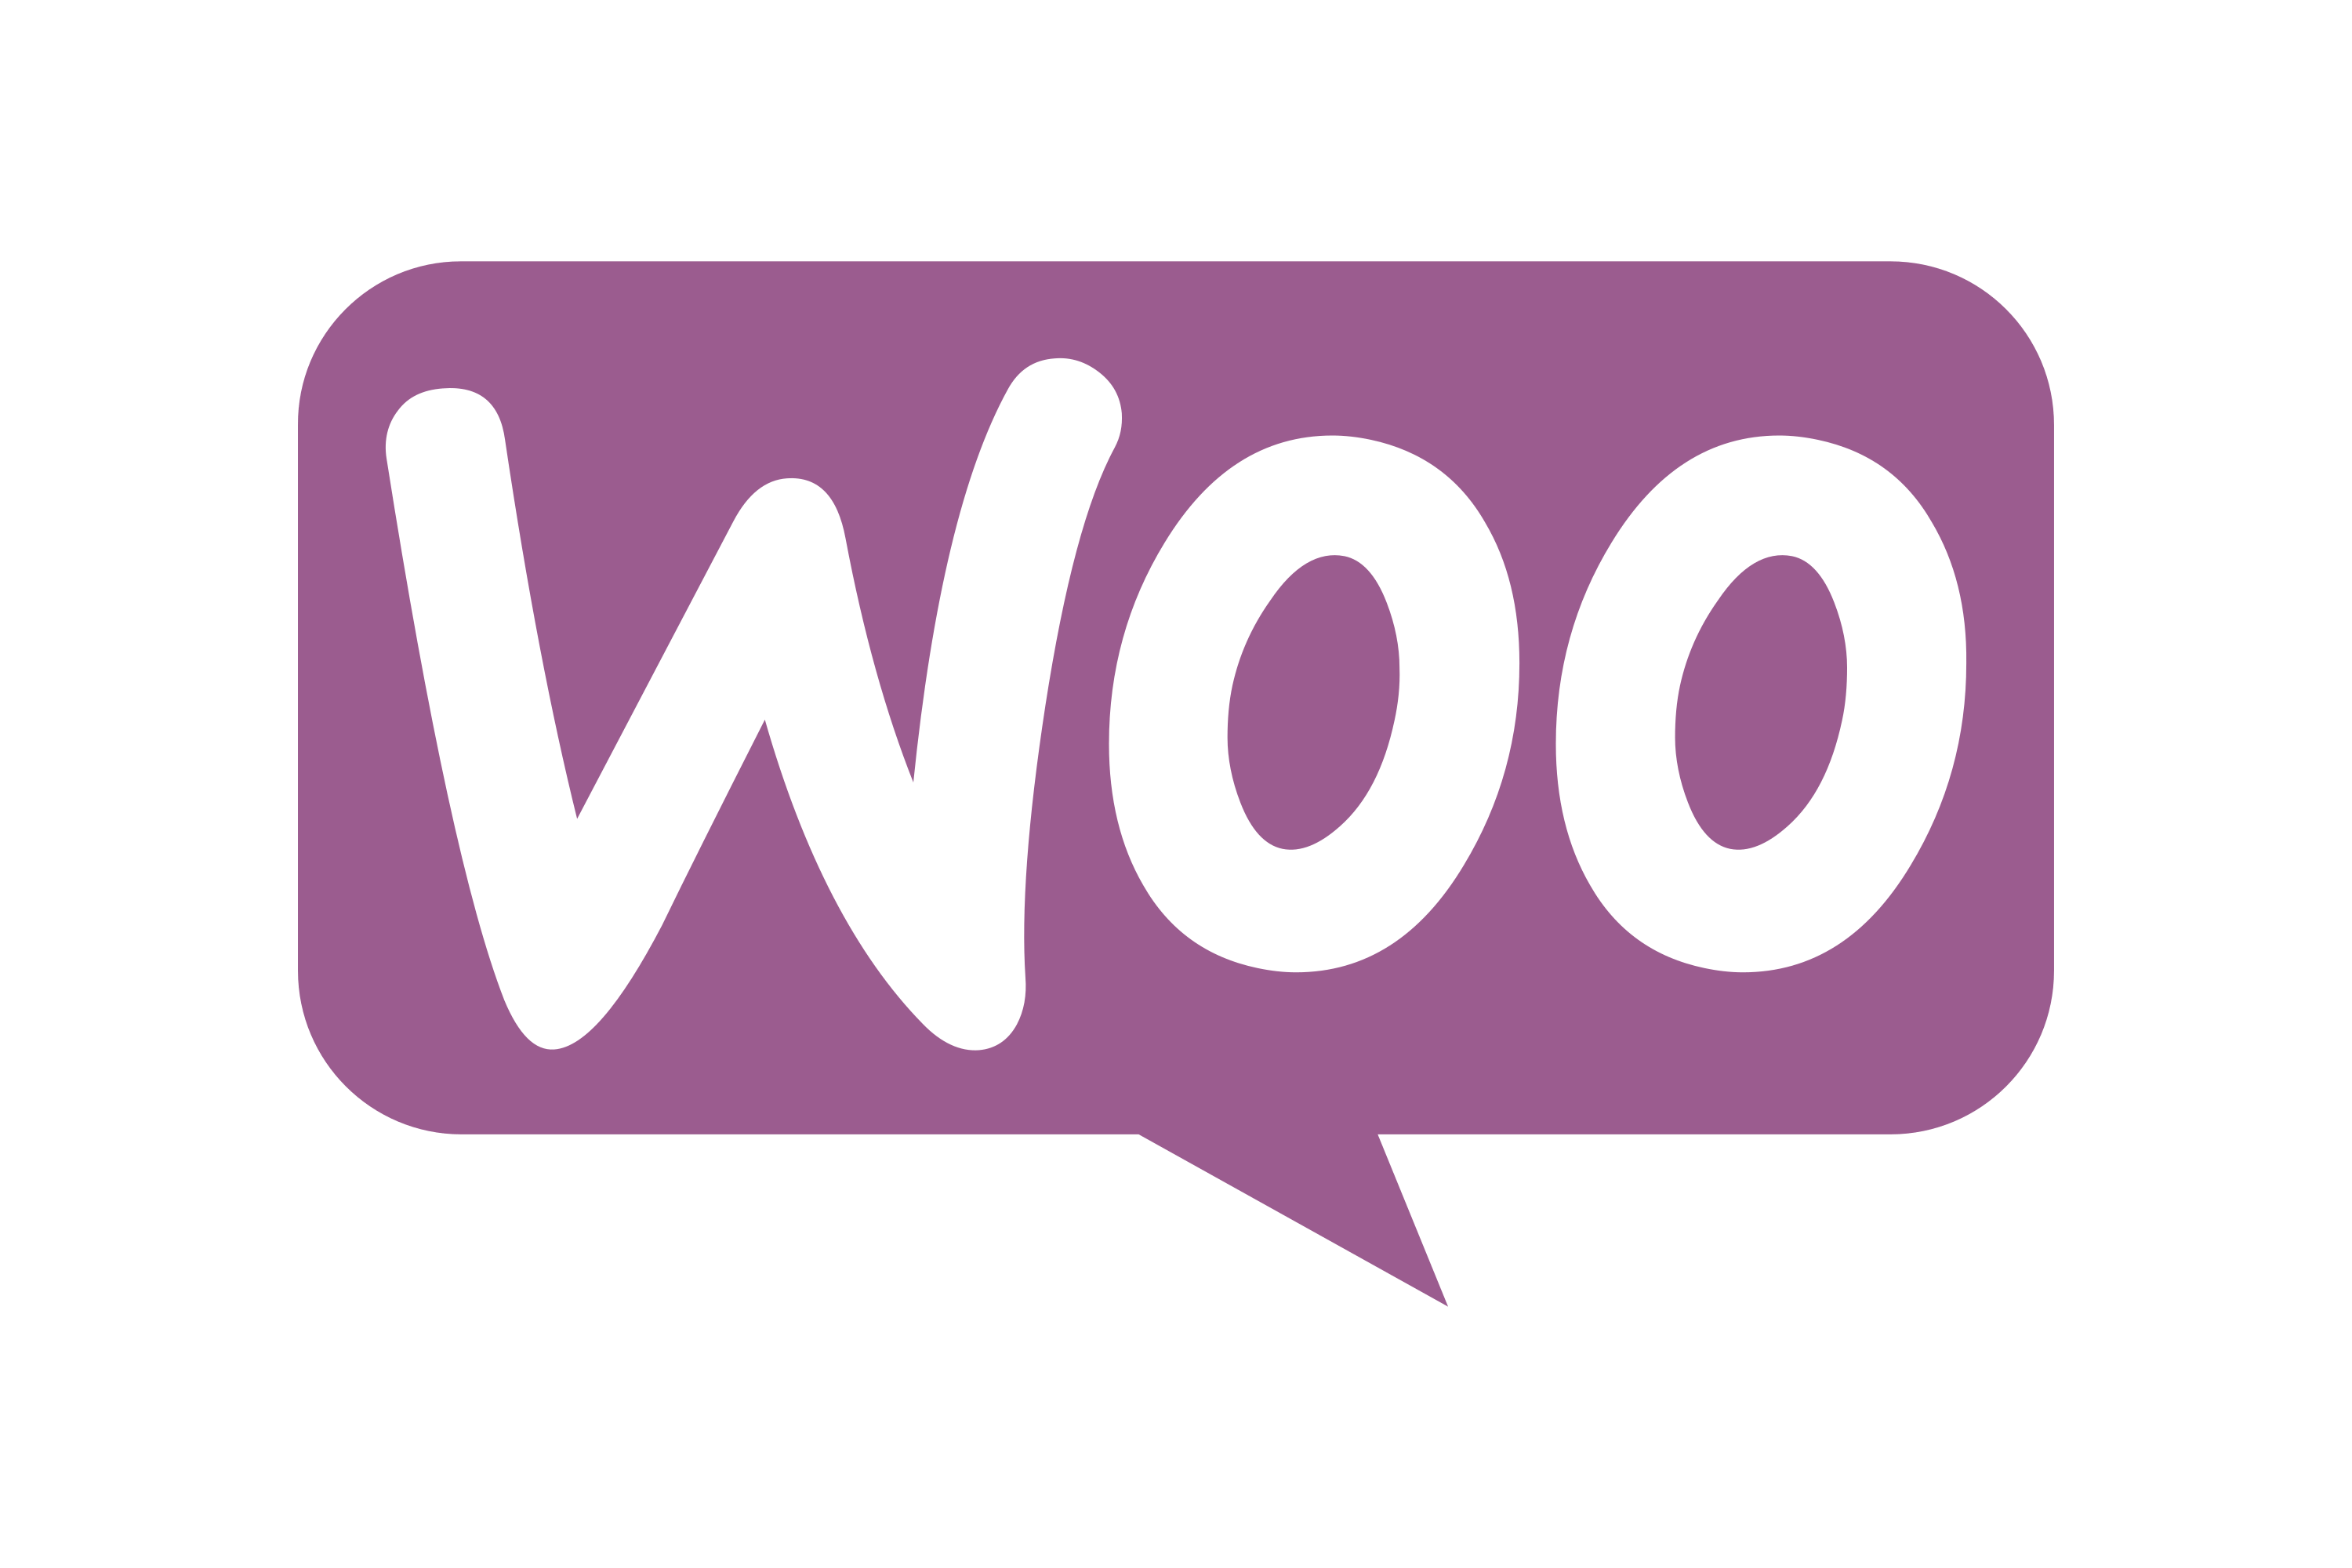 Download WooCommerce Logo in SVG Vector or PNG File Format - Logo.wine